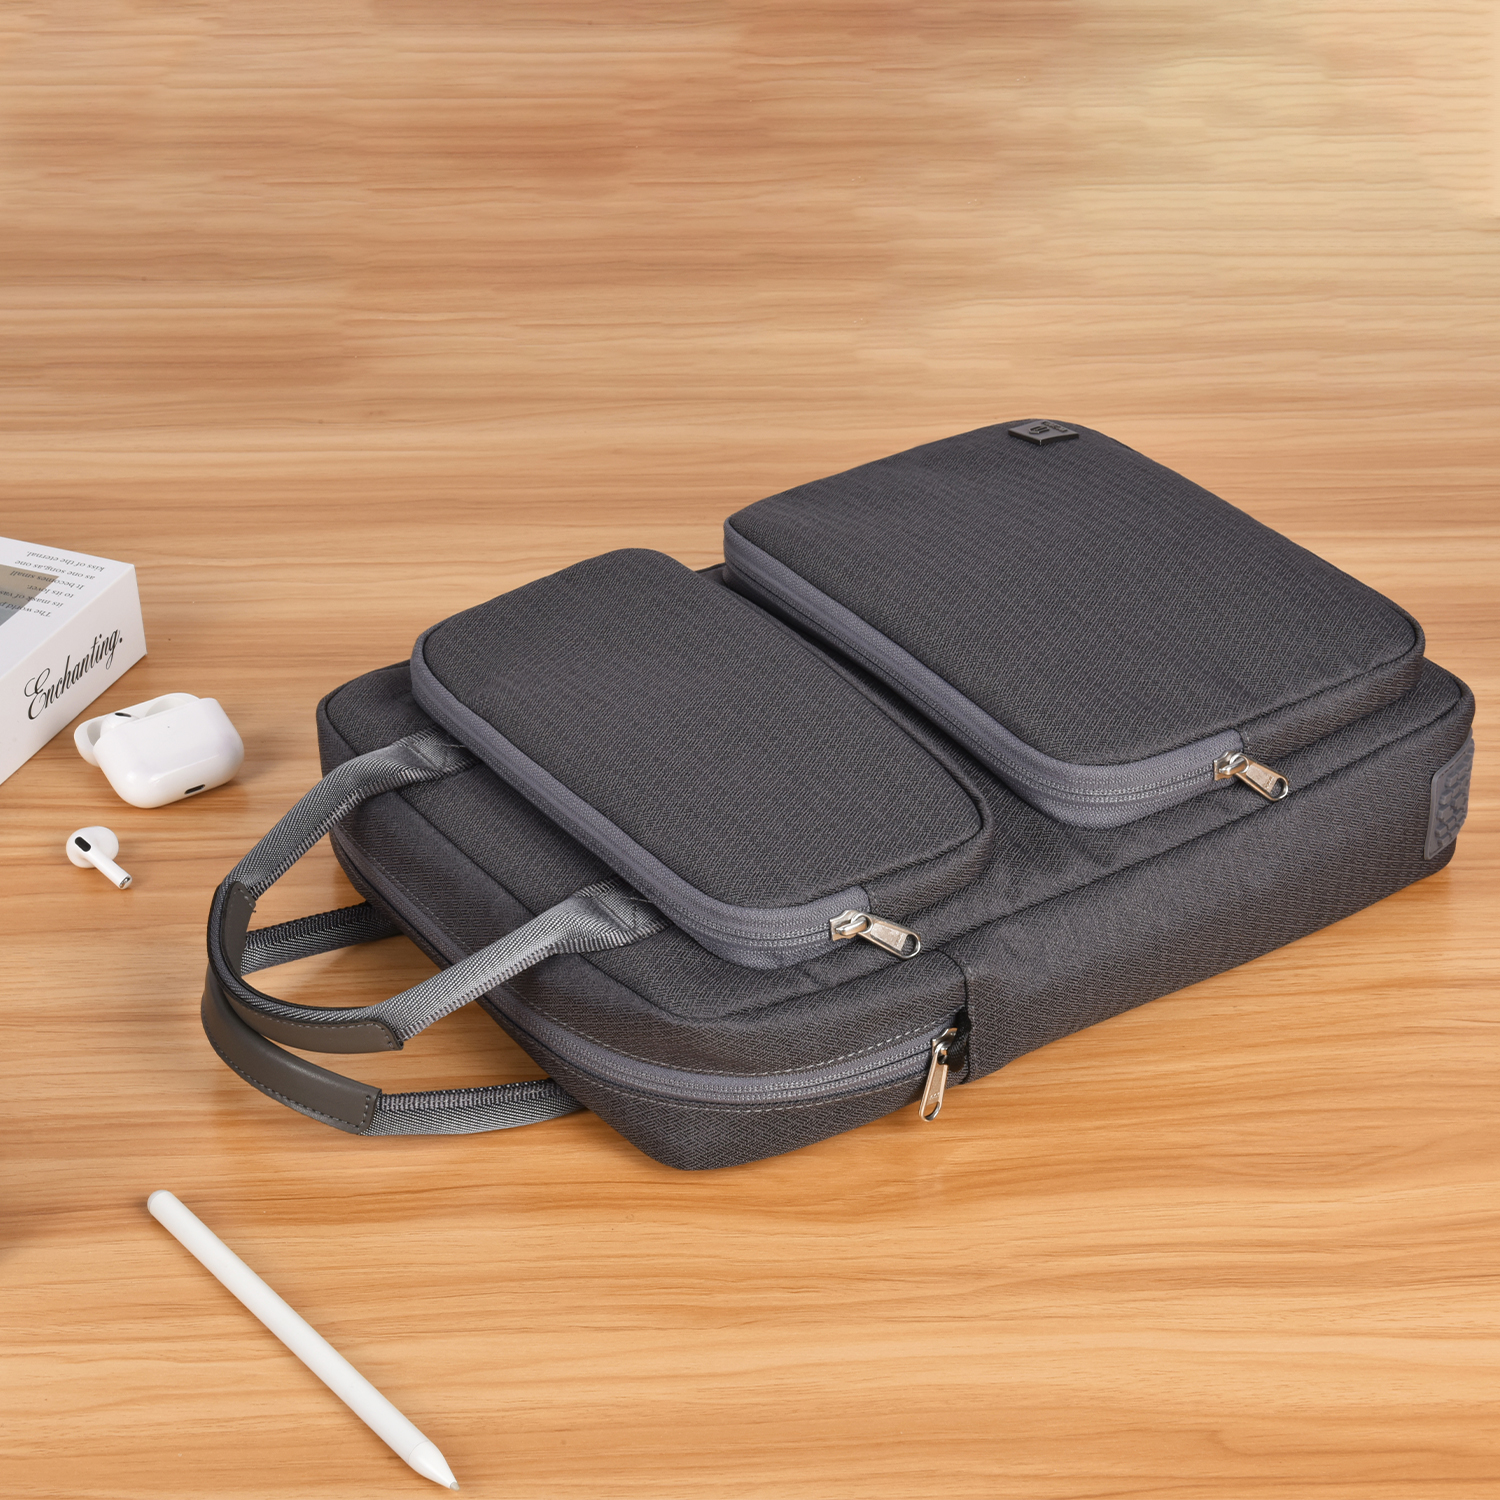 WiWU Factory Custom 14.2 inch Laptop Sling Bag for Men Women Water-resistant Multi-Pocket Electronic Accessories Organizer Bag